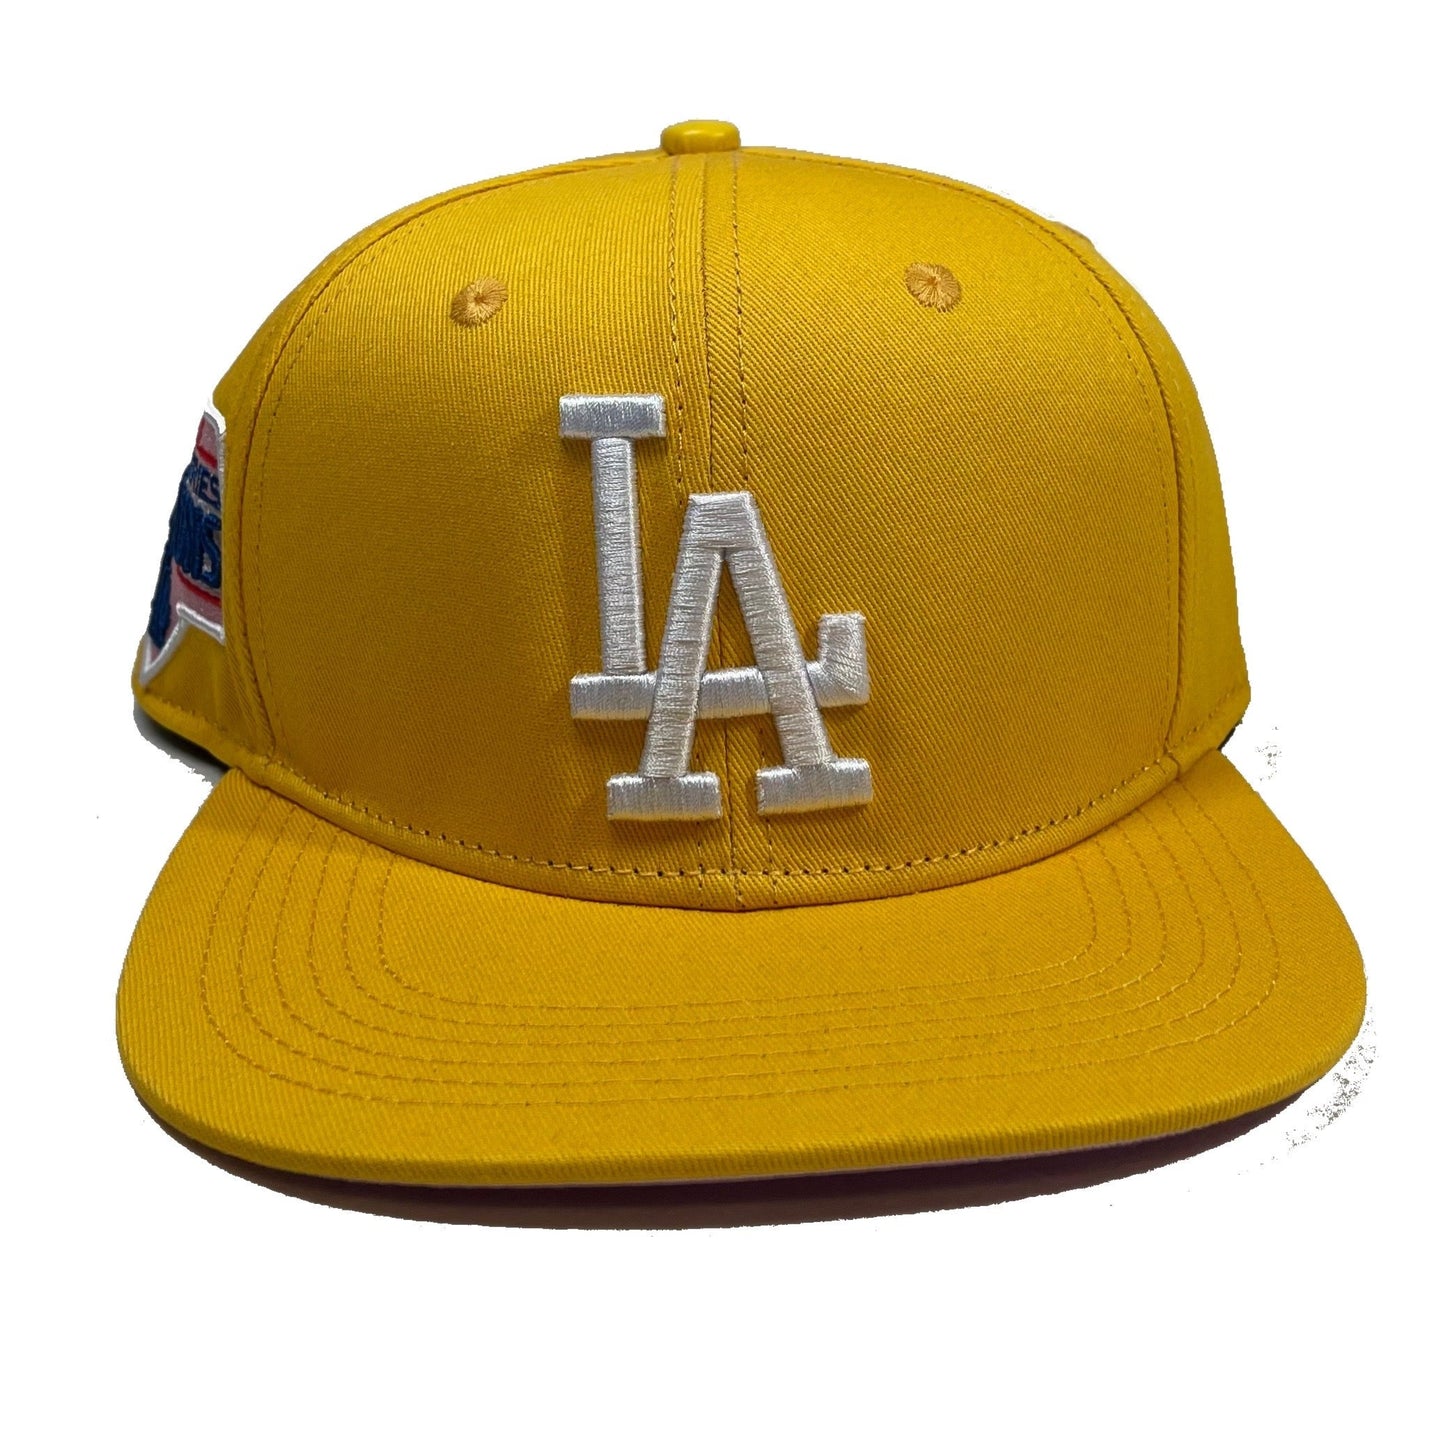 Los Angeles Dodgers 2020 World Series (Yellow) Snapback